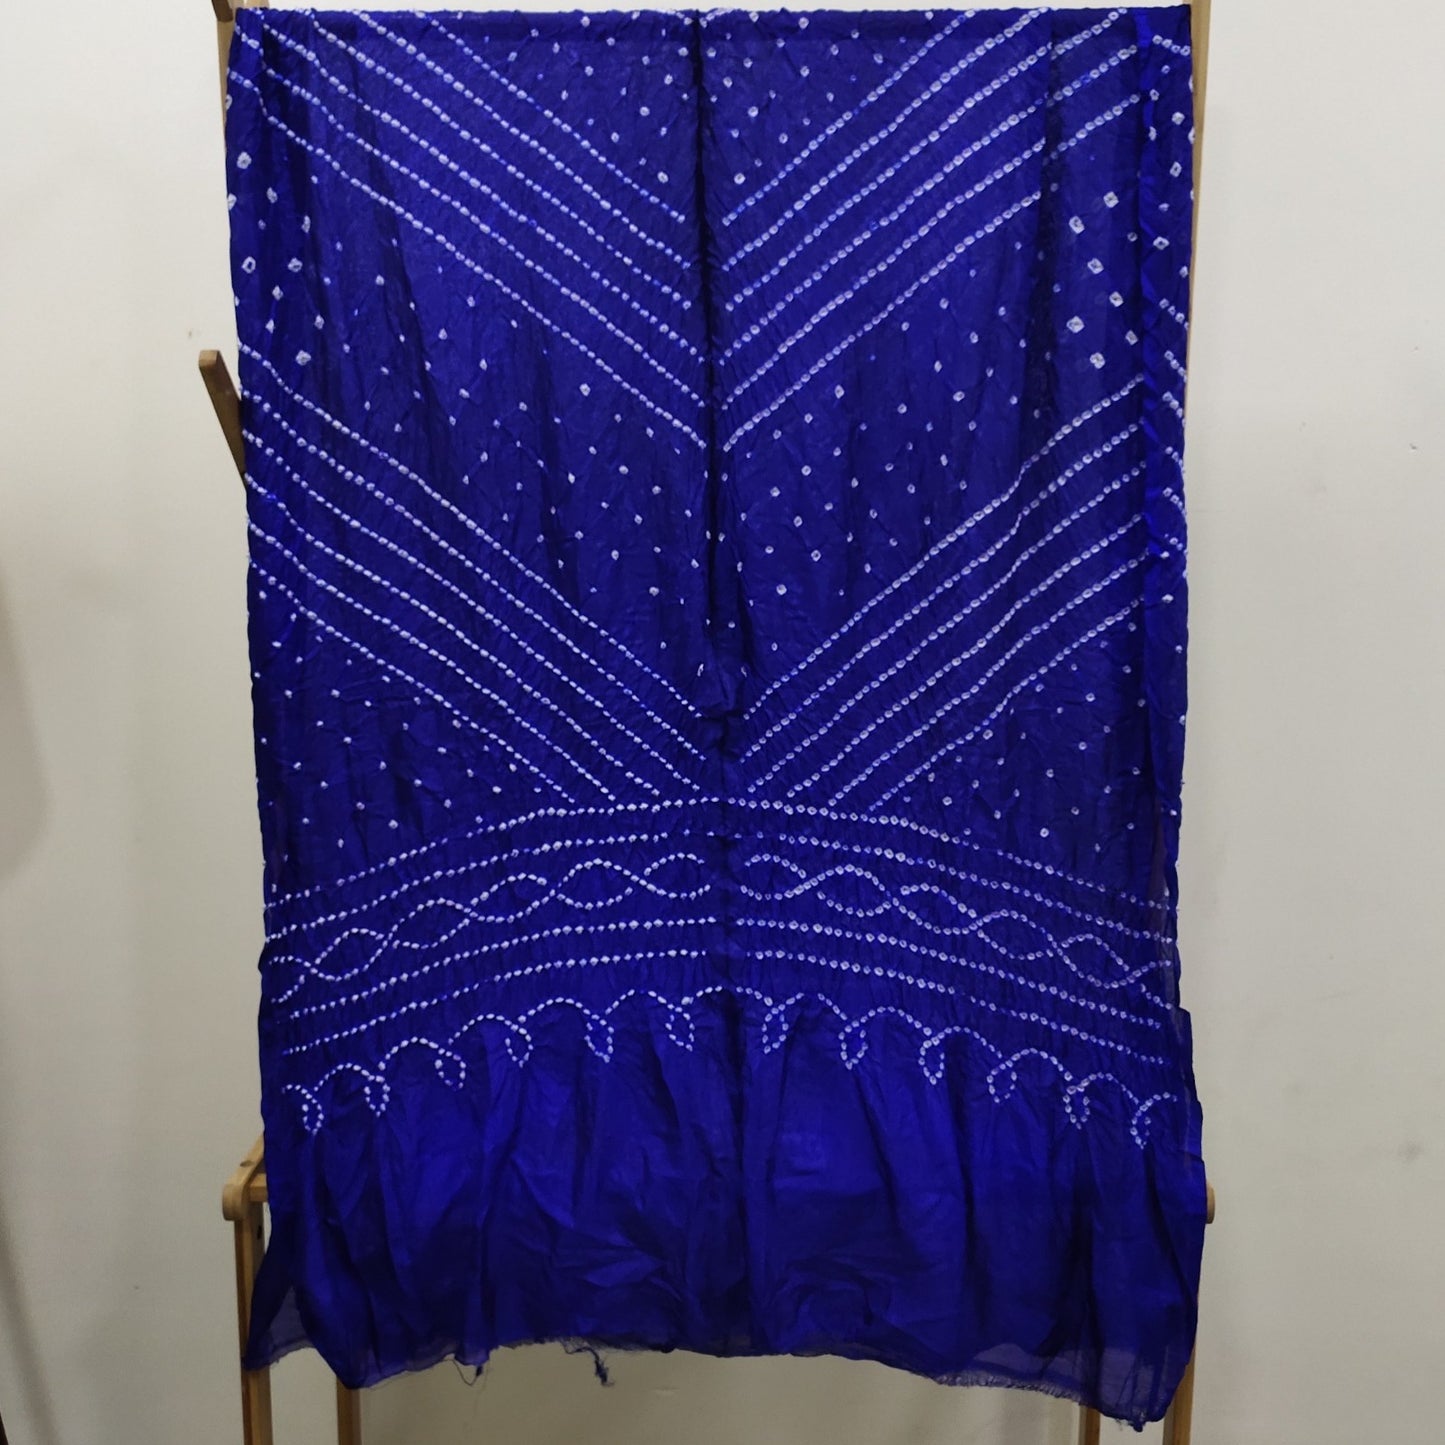 Art Silk Bandhani Dupatta - Blue